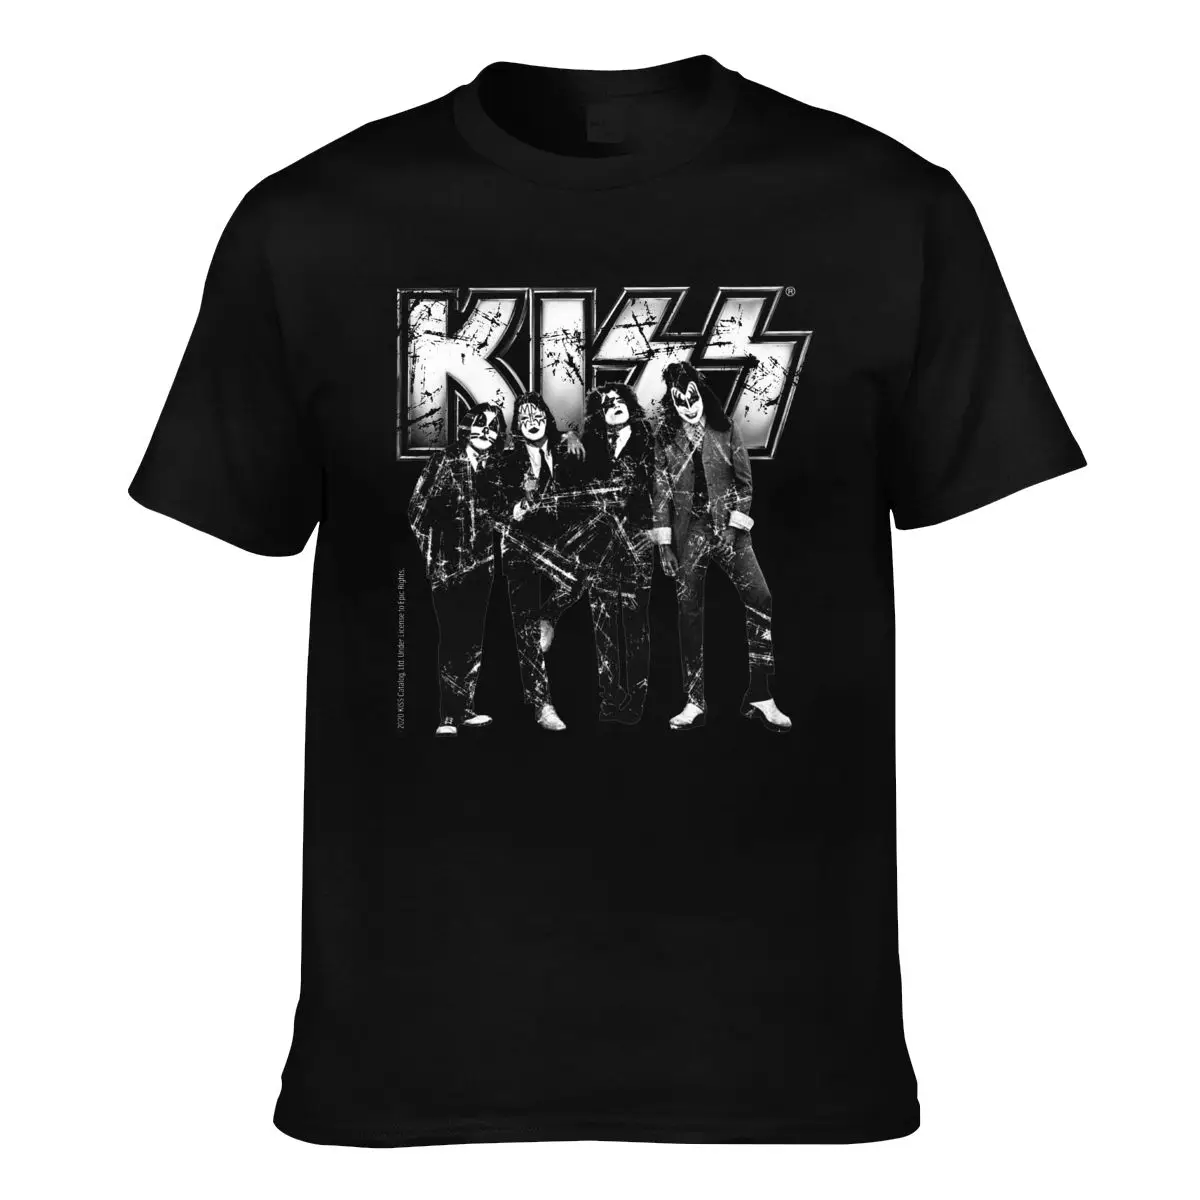 

Men's T-Shirts KISS The Band Popular T Shirts band fanart rock streewear singer Summer Tee Shirt Crewneck Top Tees